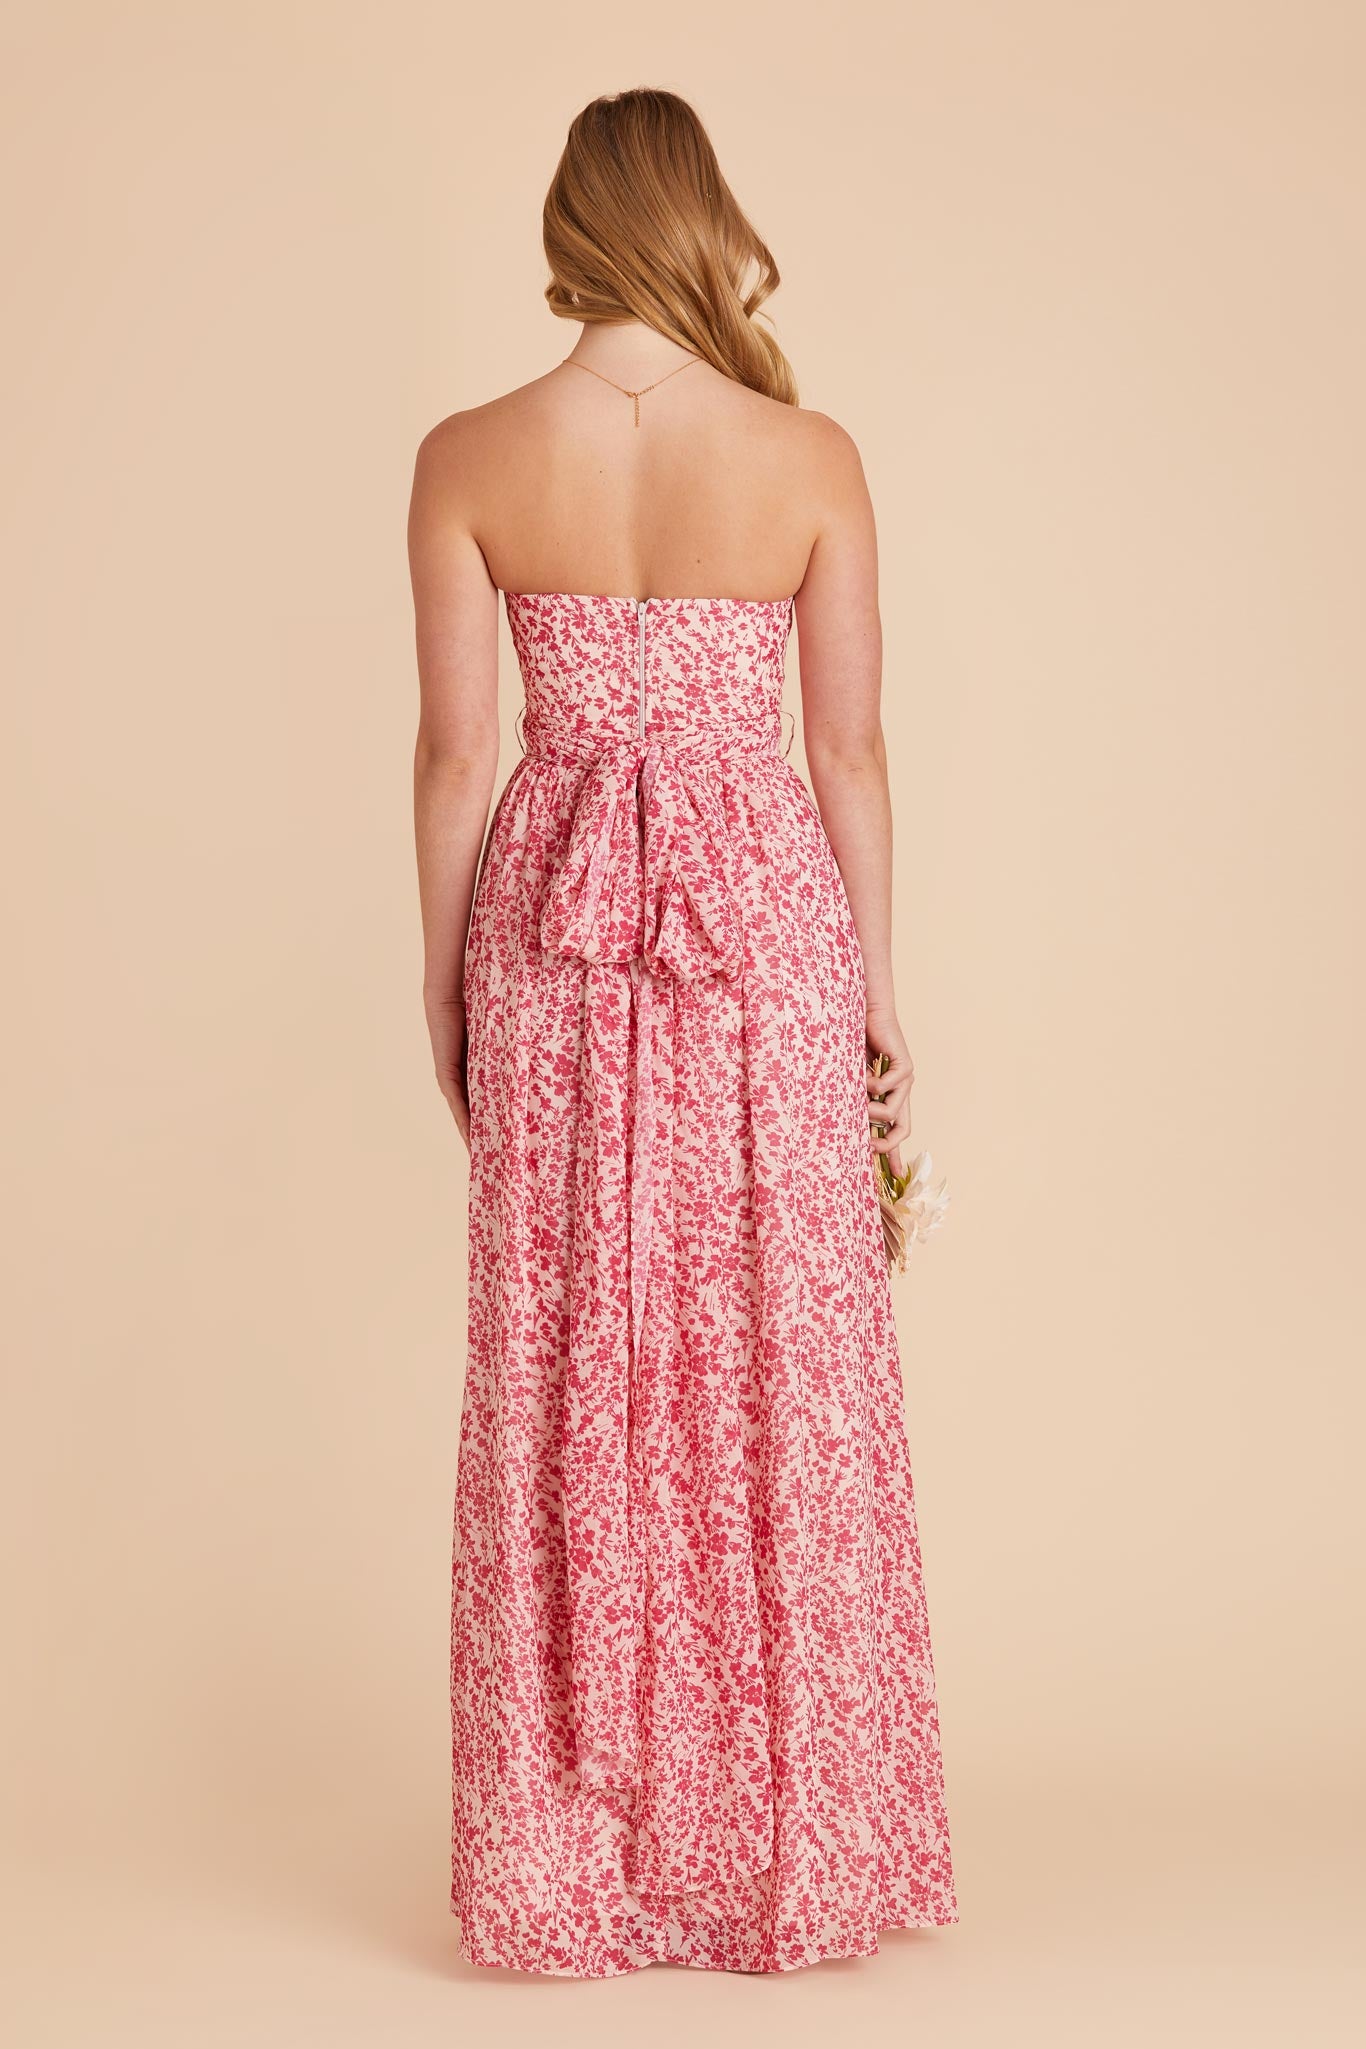 Grace Convertible Chiffon Bridesmaid Dress in Pink Falling Petals